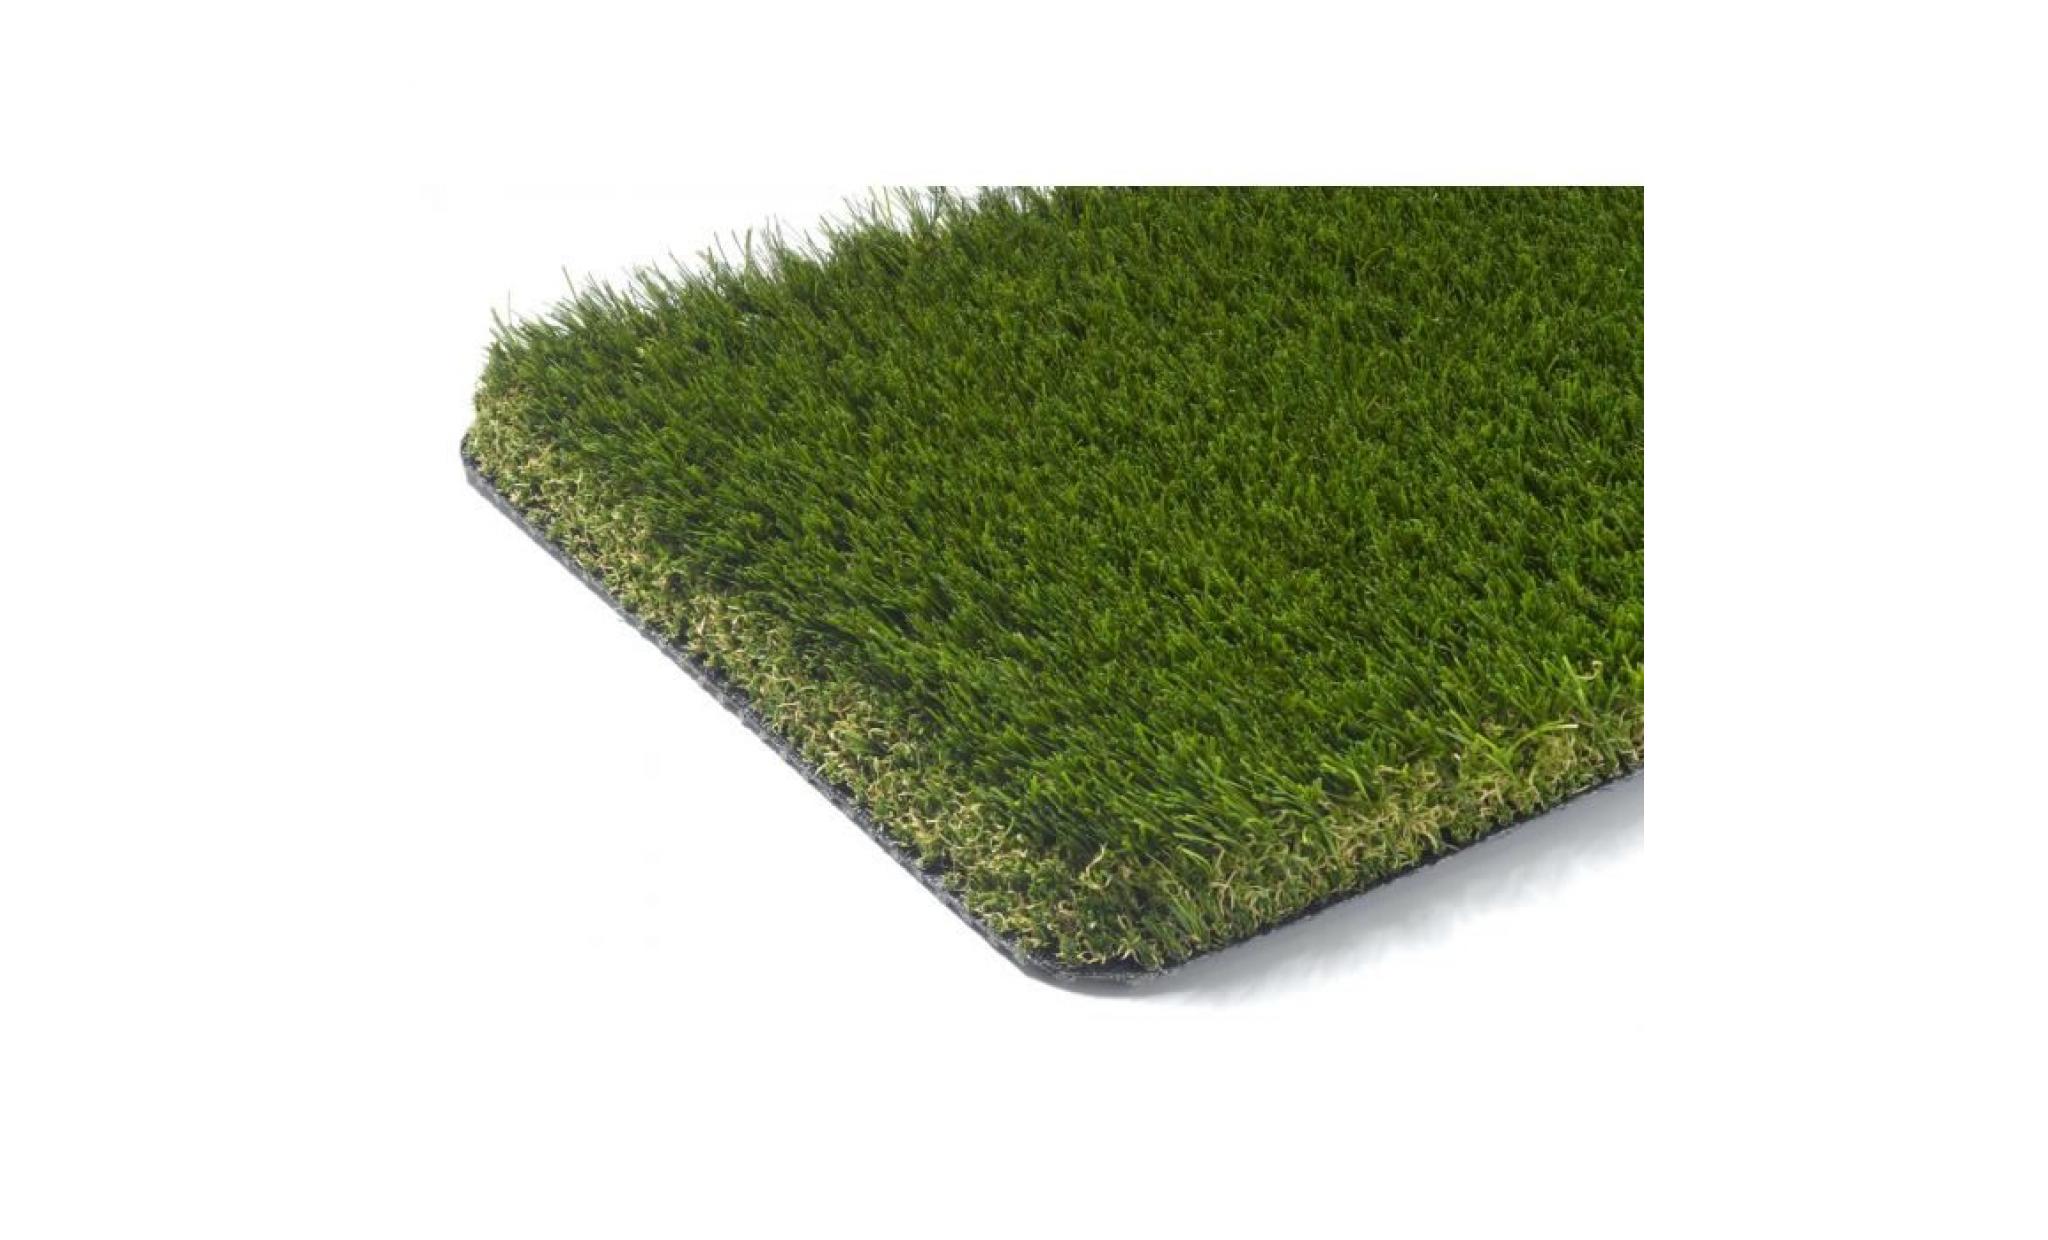 buckingham   tapis type luxe gazon artificiel – pour jardin, terrasse, balcon   vert  [200x250 cm]